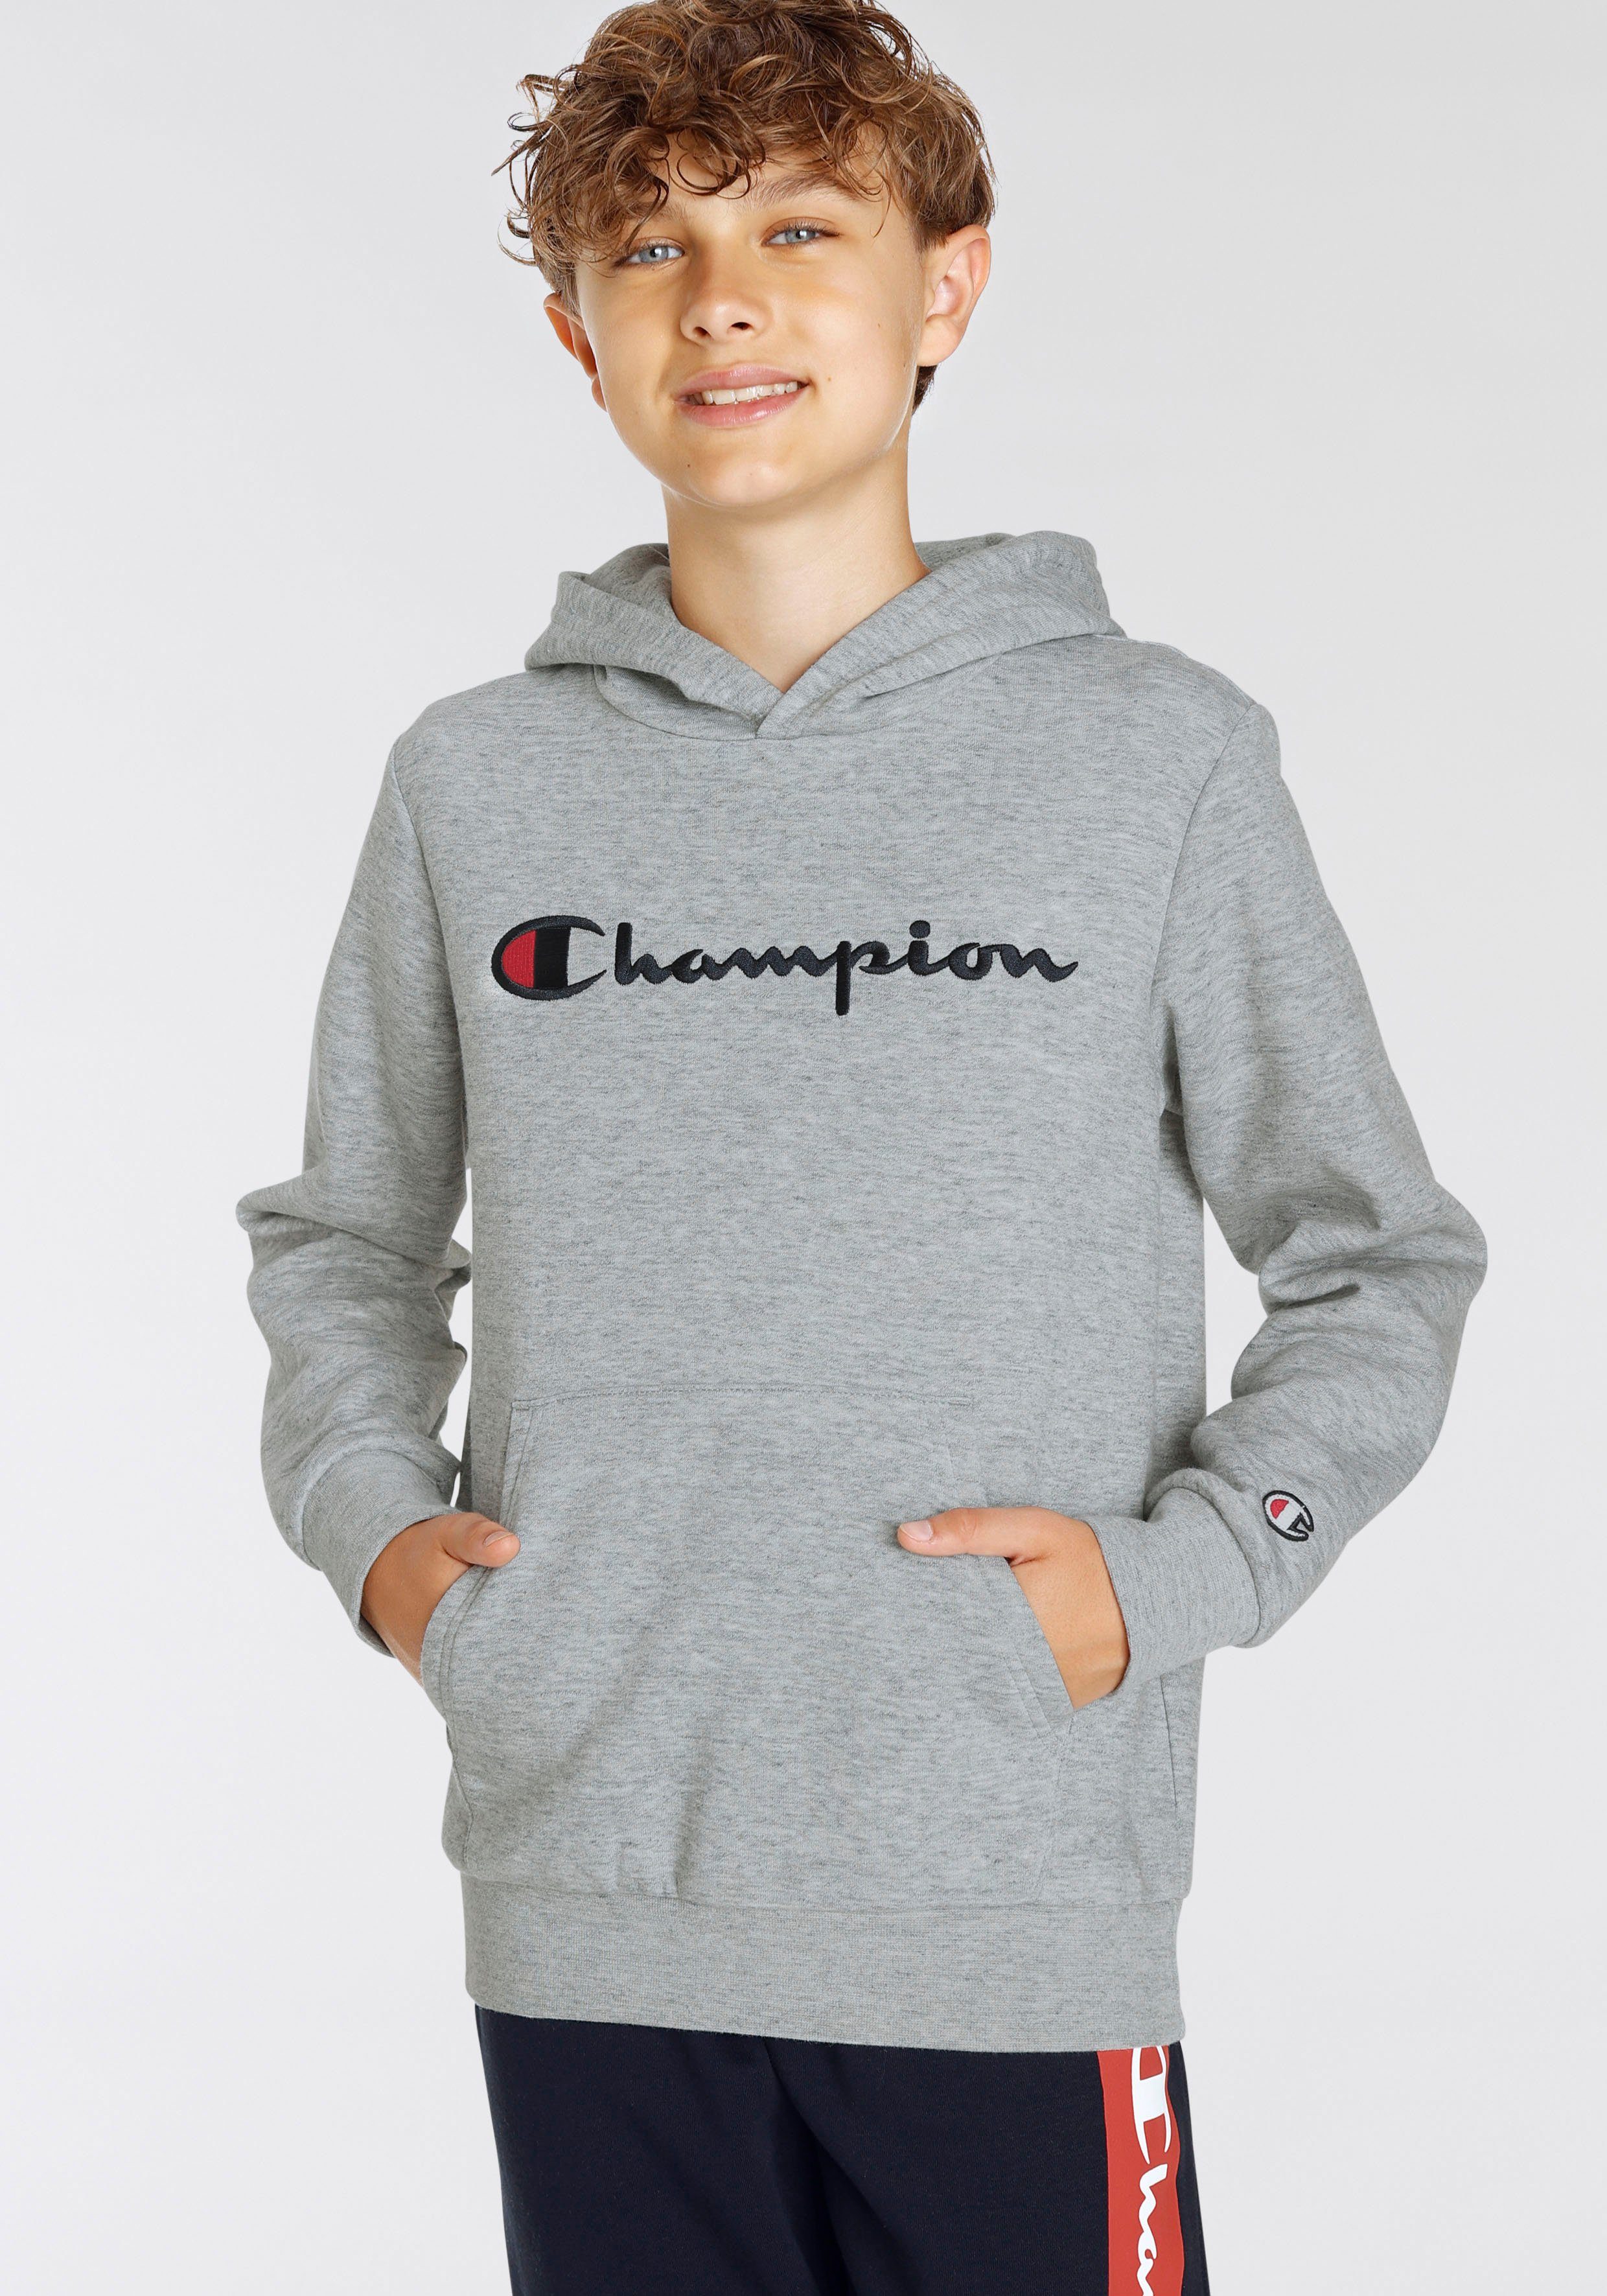 Champion Sweatshirt Classic Hooded Sweatshirt grau für 2 Kinder - large Logo